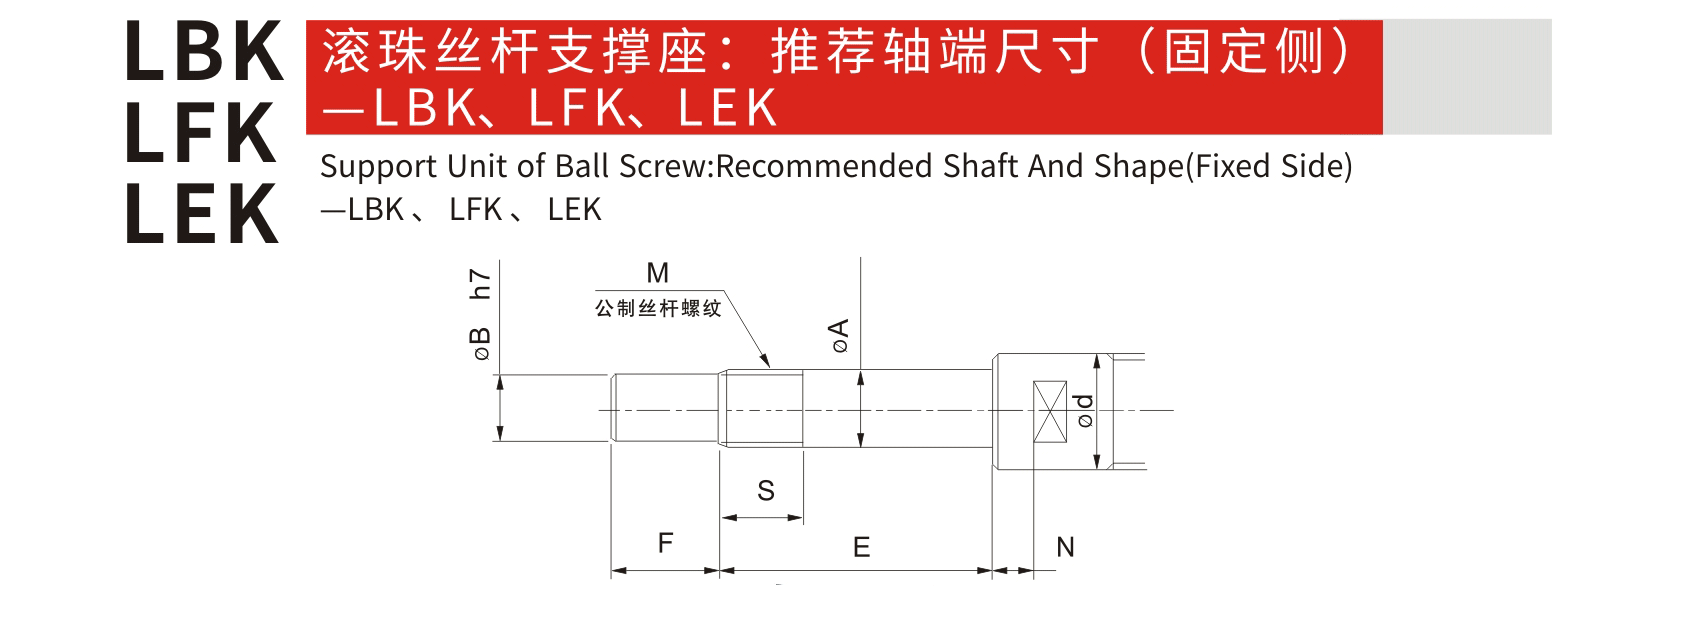 LEK 固定侧_联轴器种类-广州菱科自动化设备有限公司